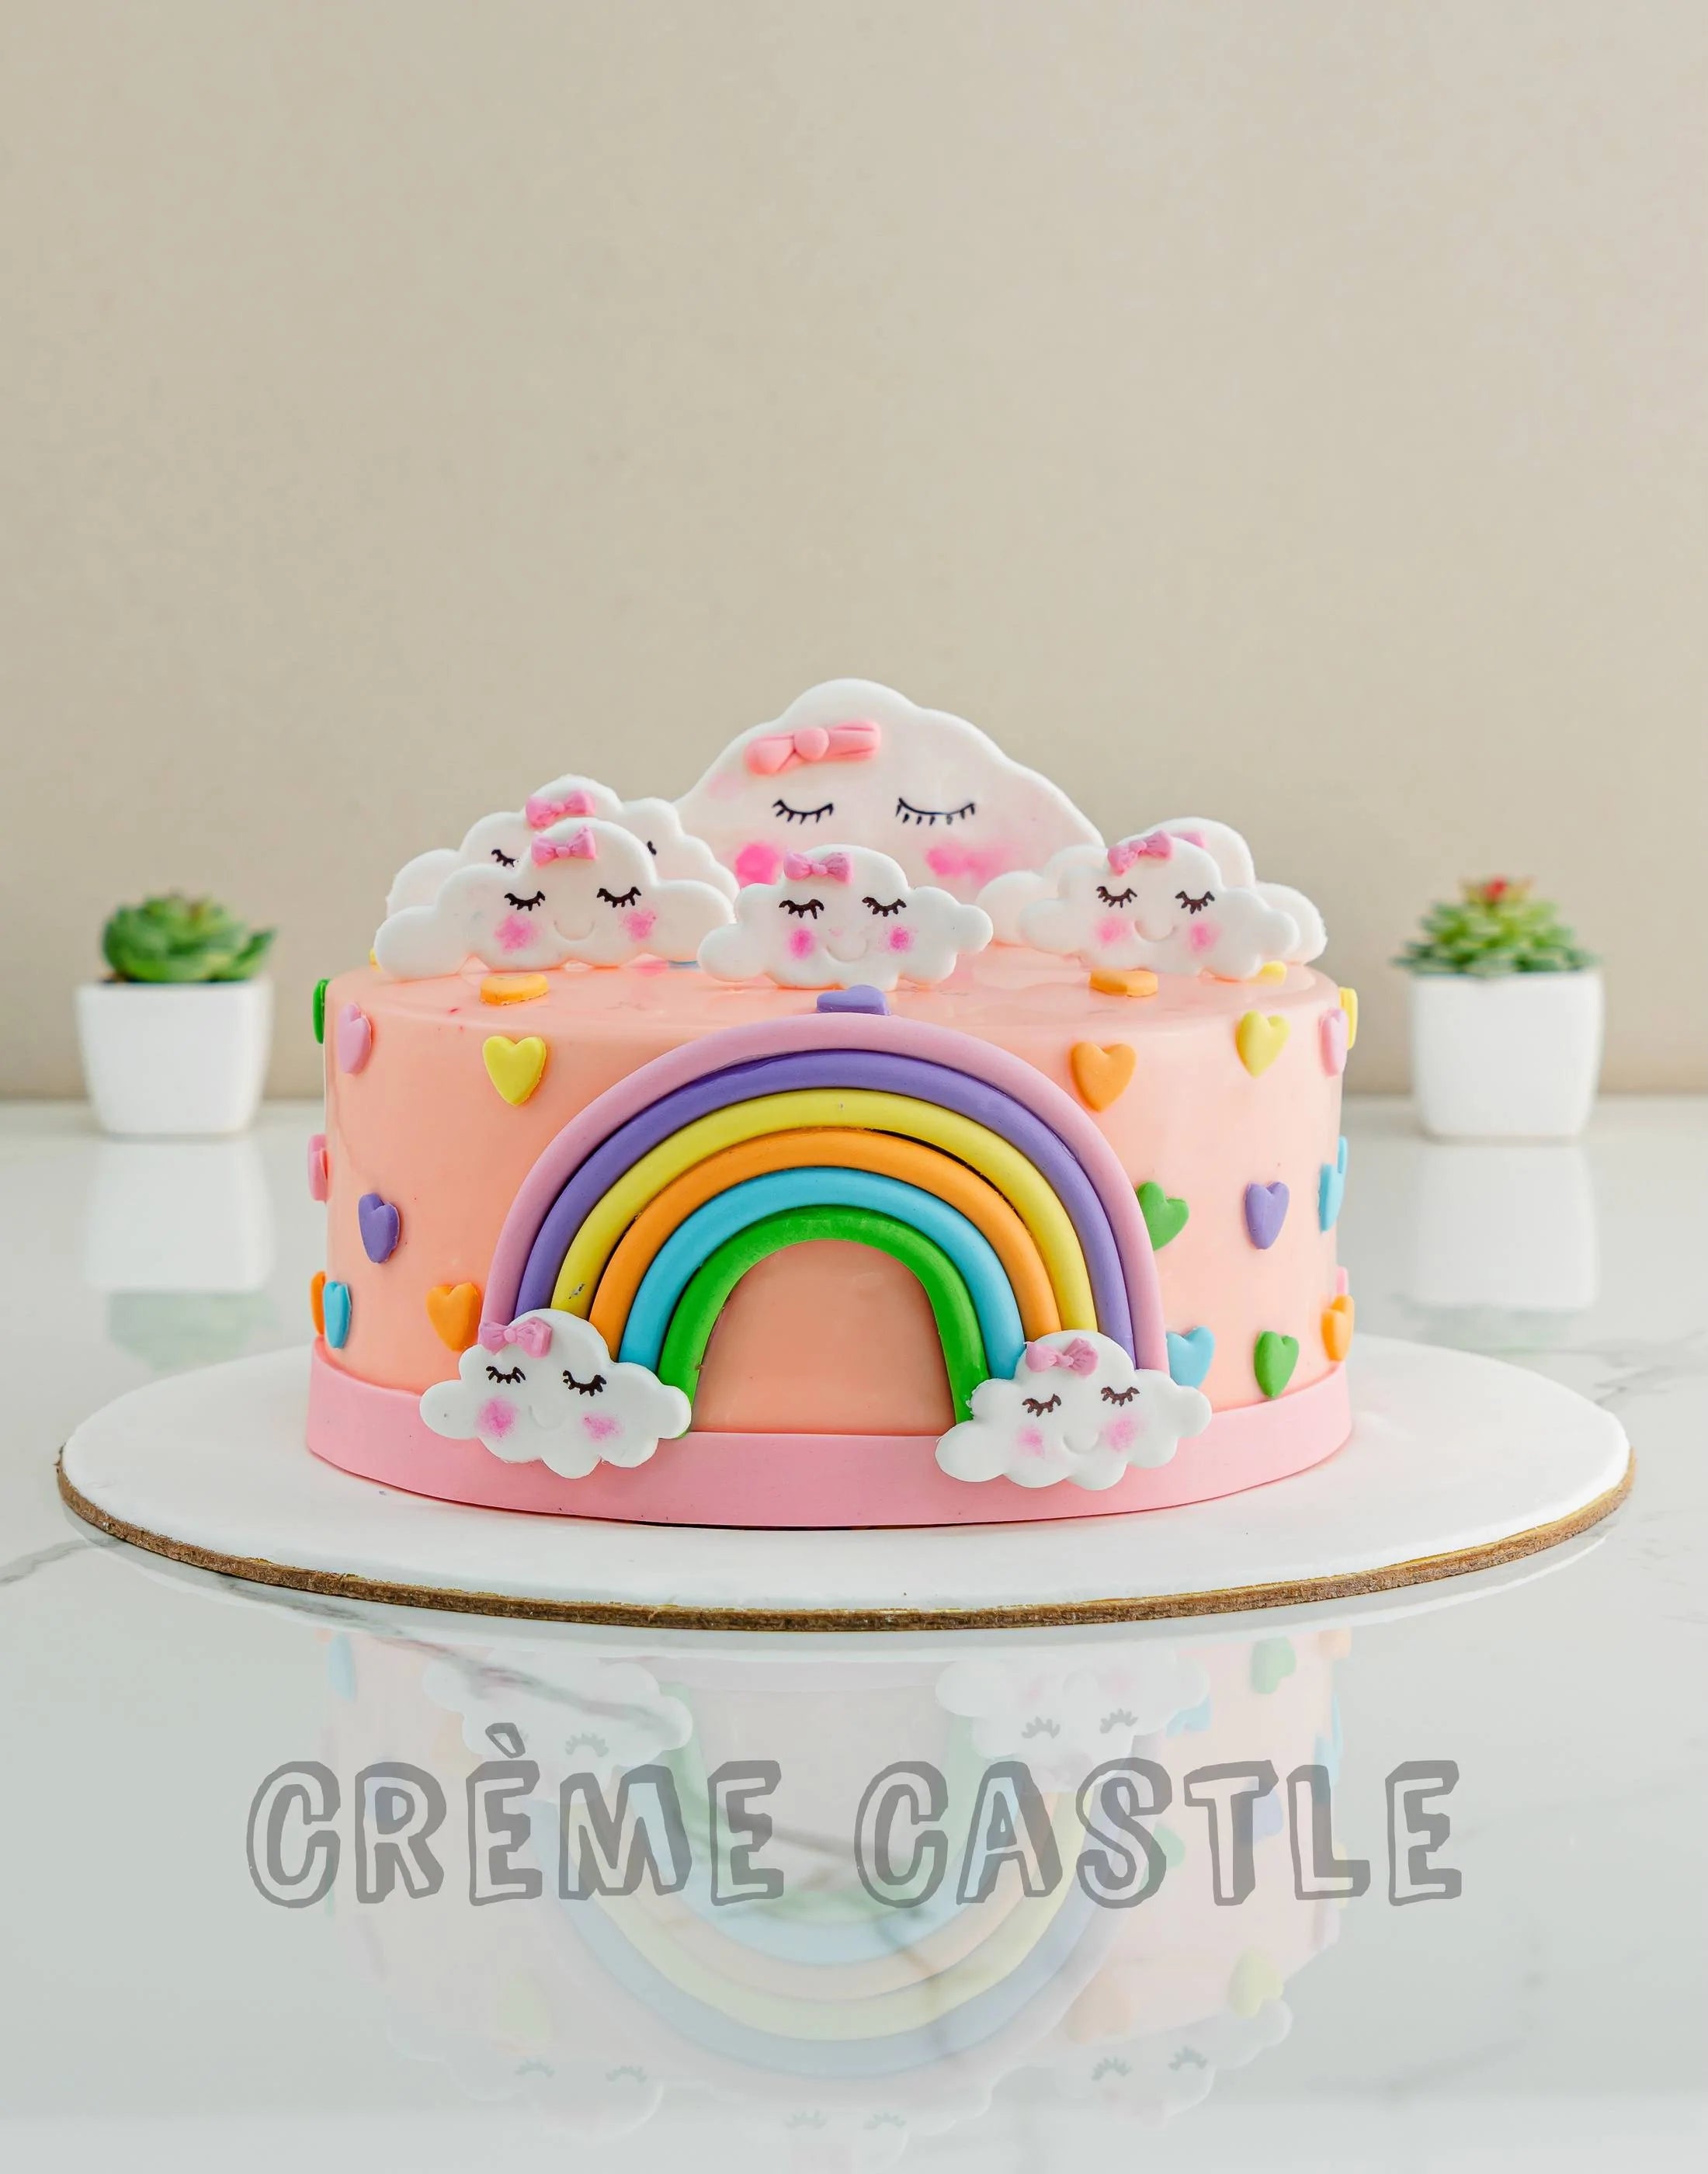 1697) 3 Square Tiered Rainbow Flower Cake - ABC Cake Shop & Bakery